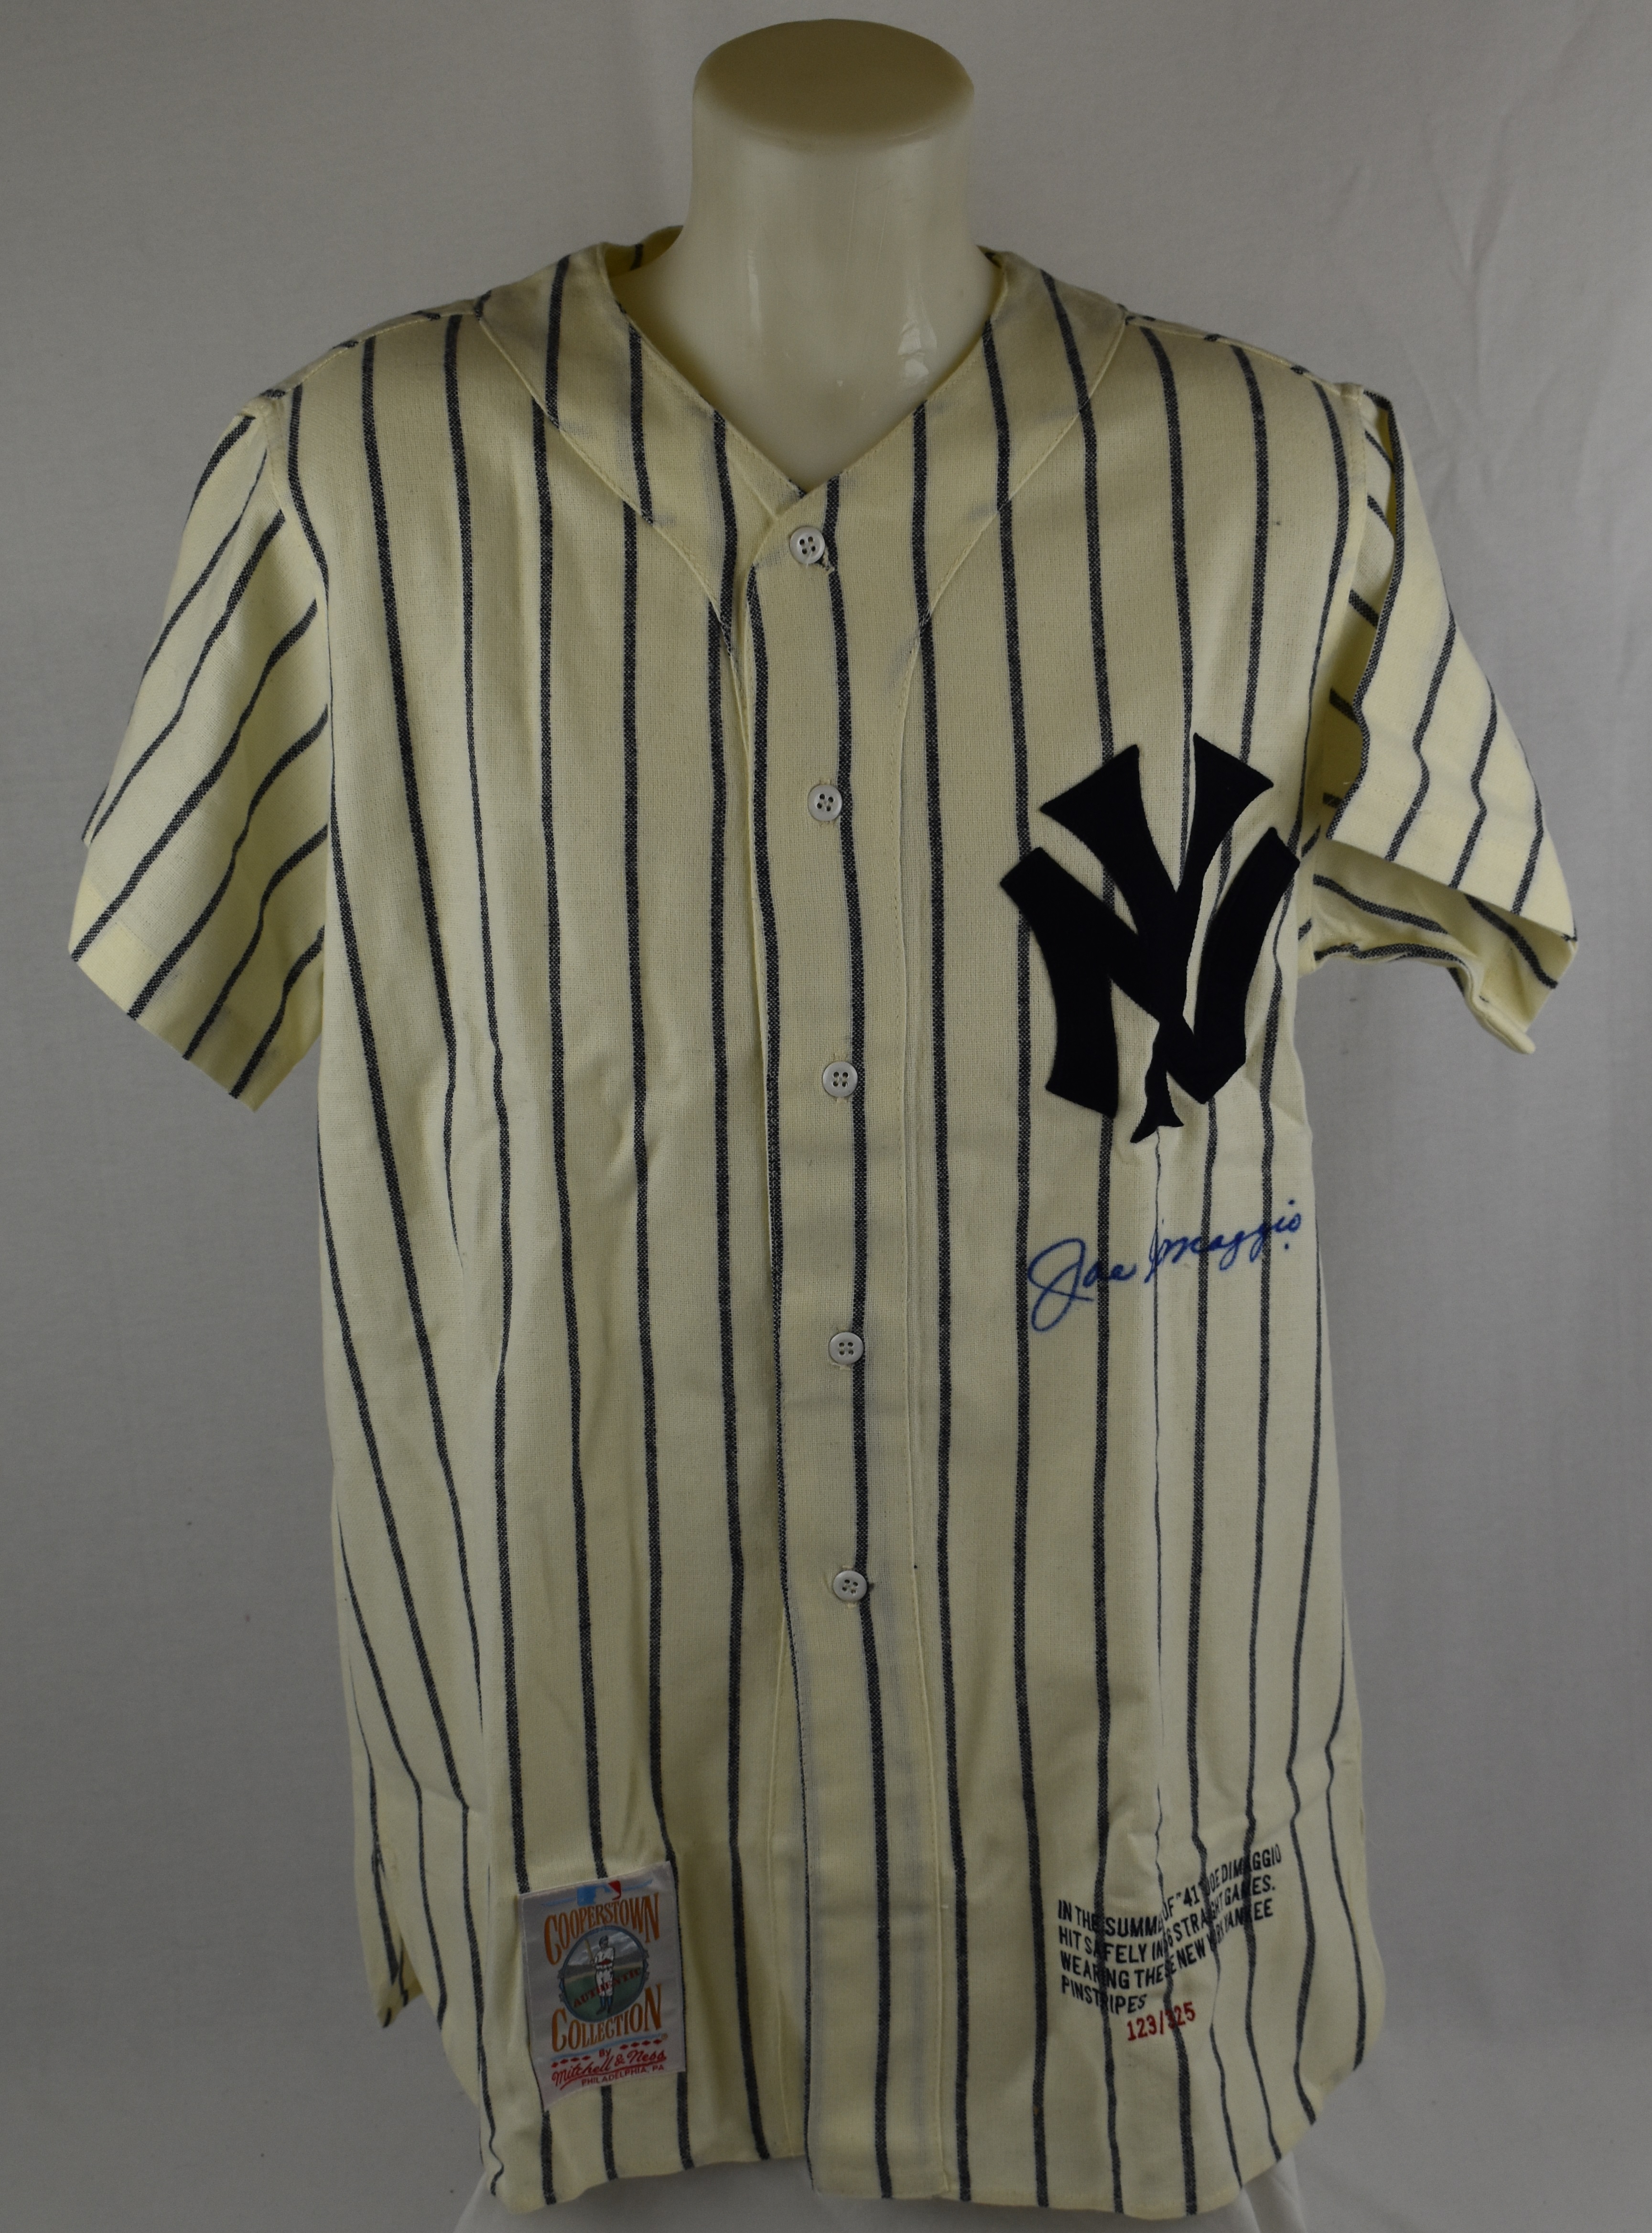 Sold at Auction: Joe DiMaggio SIGNED New York Yankee Uniform Jersey